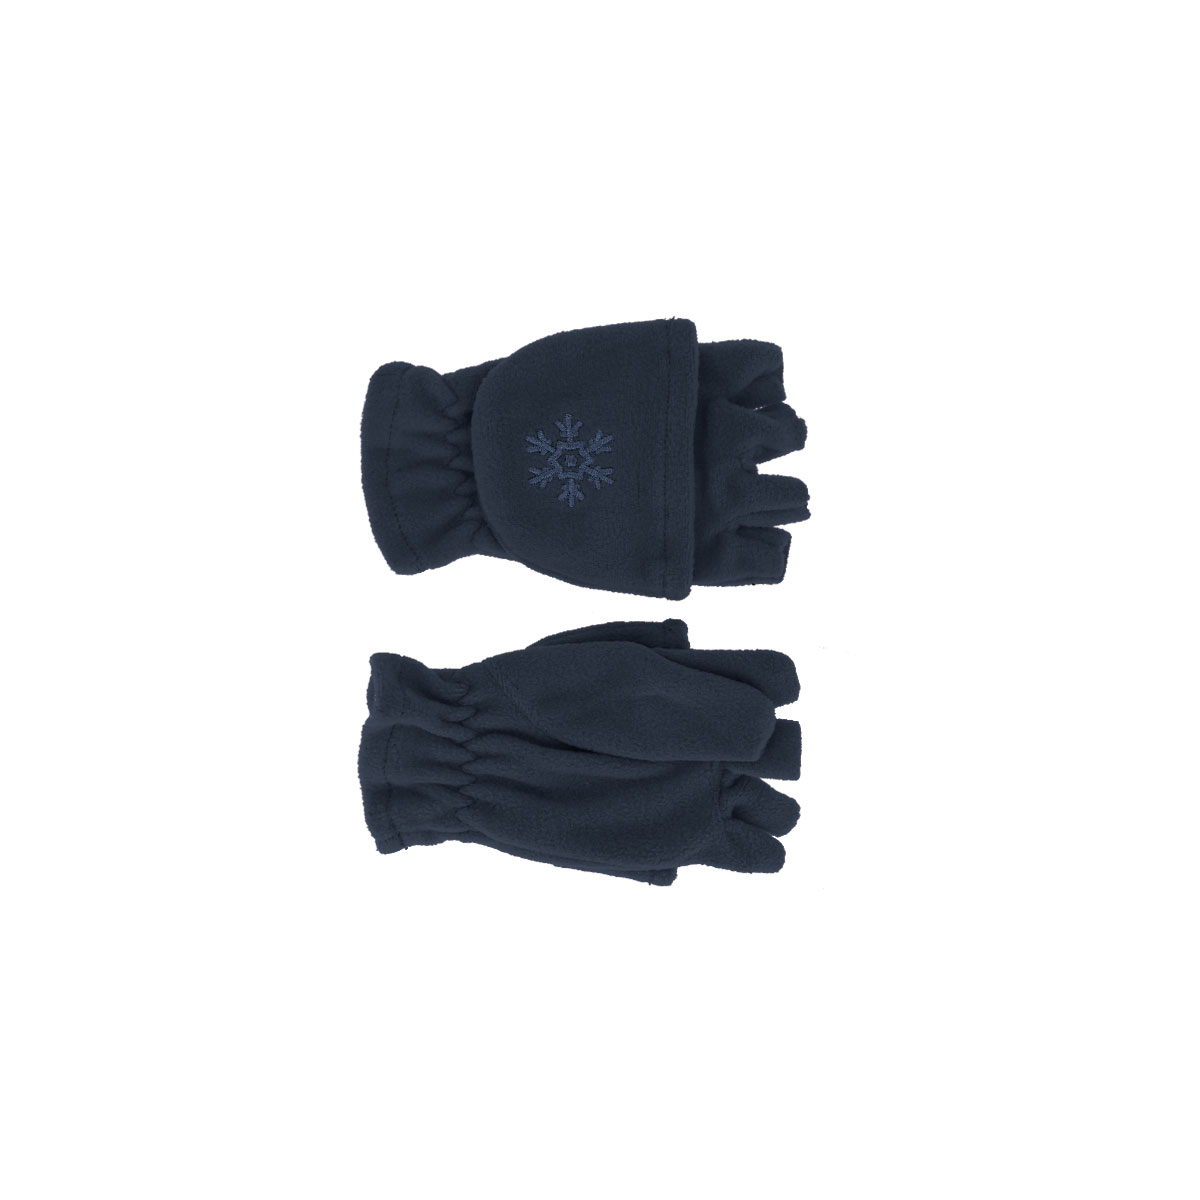 Kinder-Handschuhe, Gr. 4, schwarz